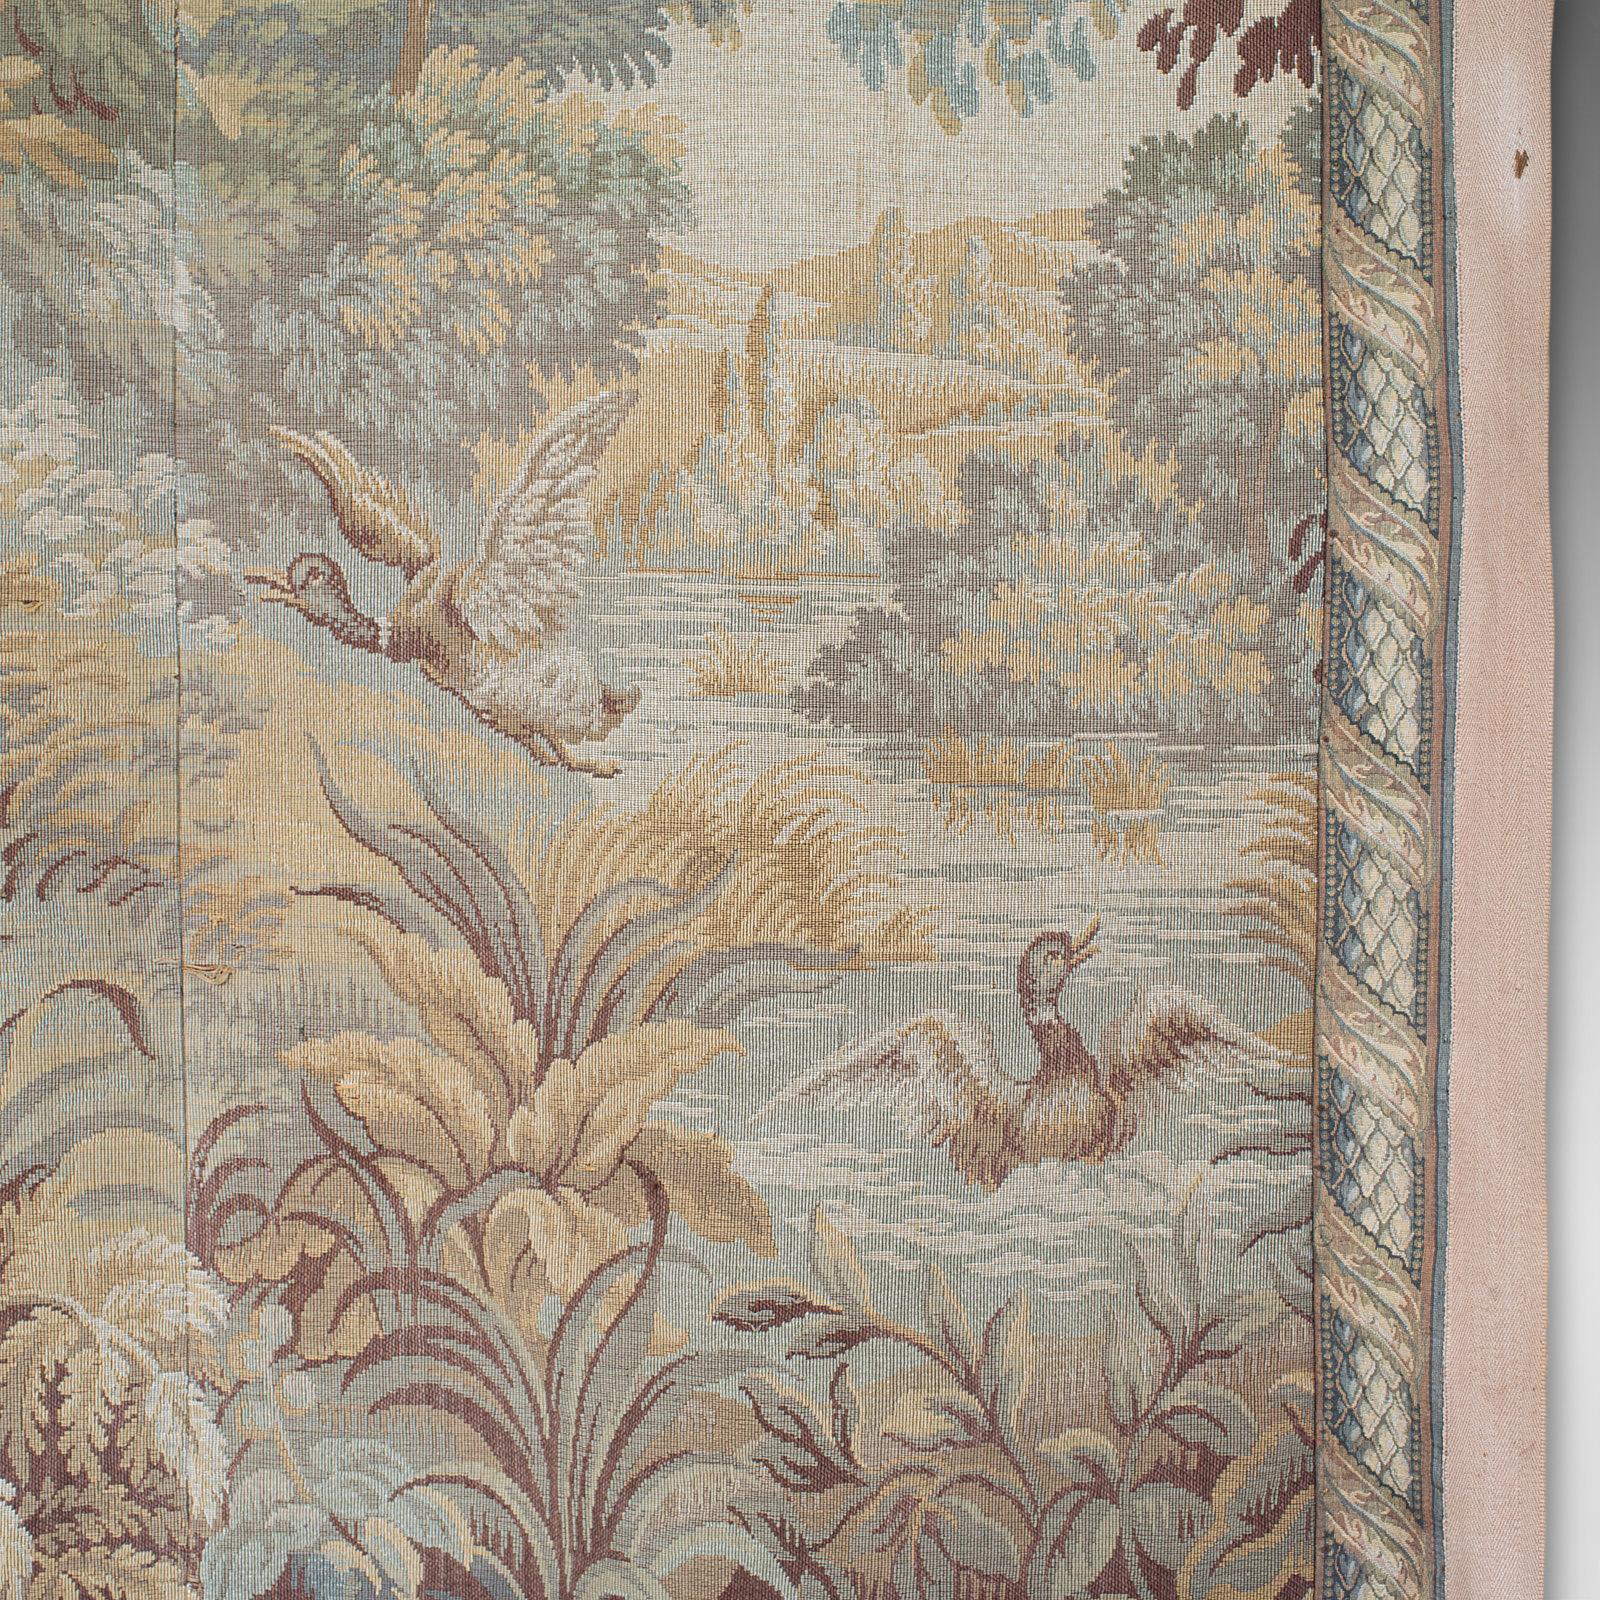 vAntique Verdure Tapestry, Continental, Textile, Wall, Decorative, Victorian 1